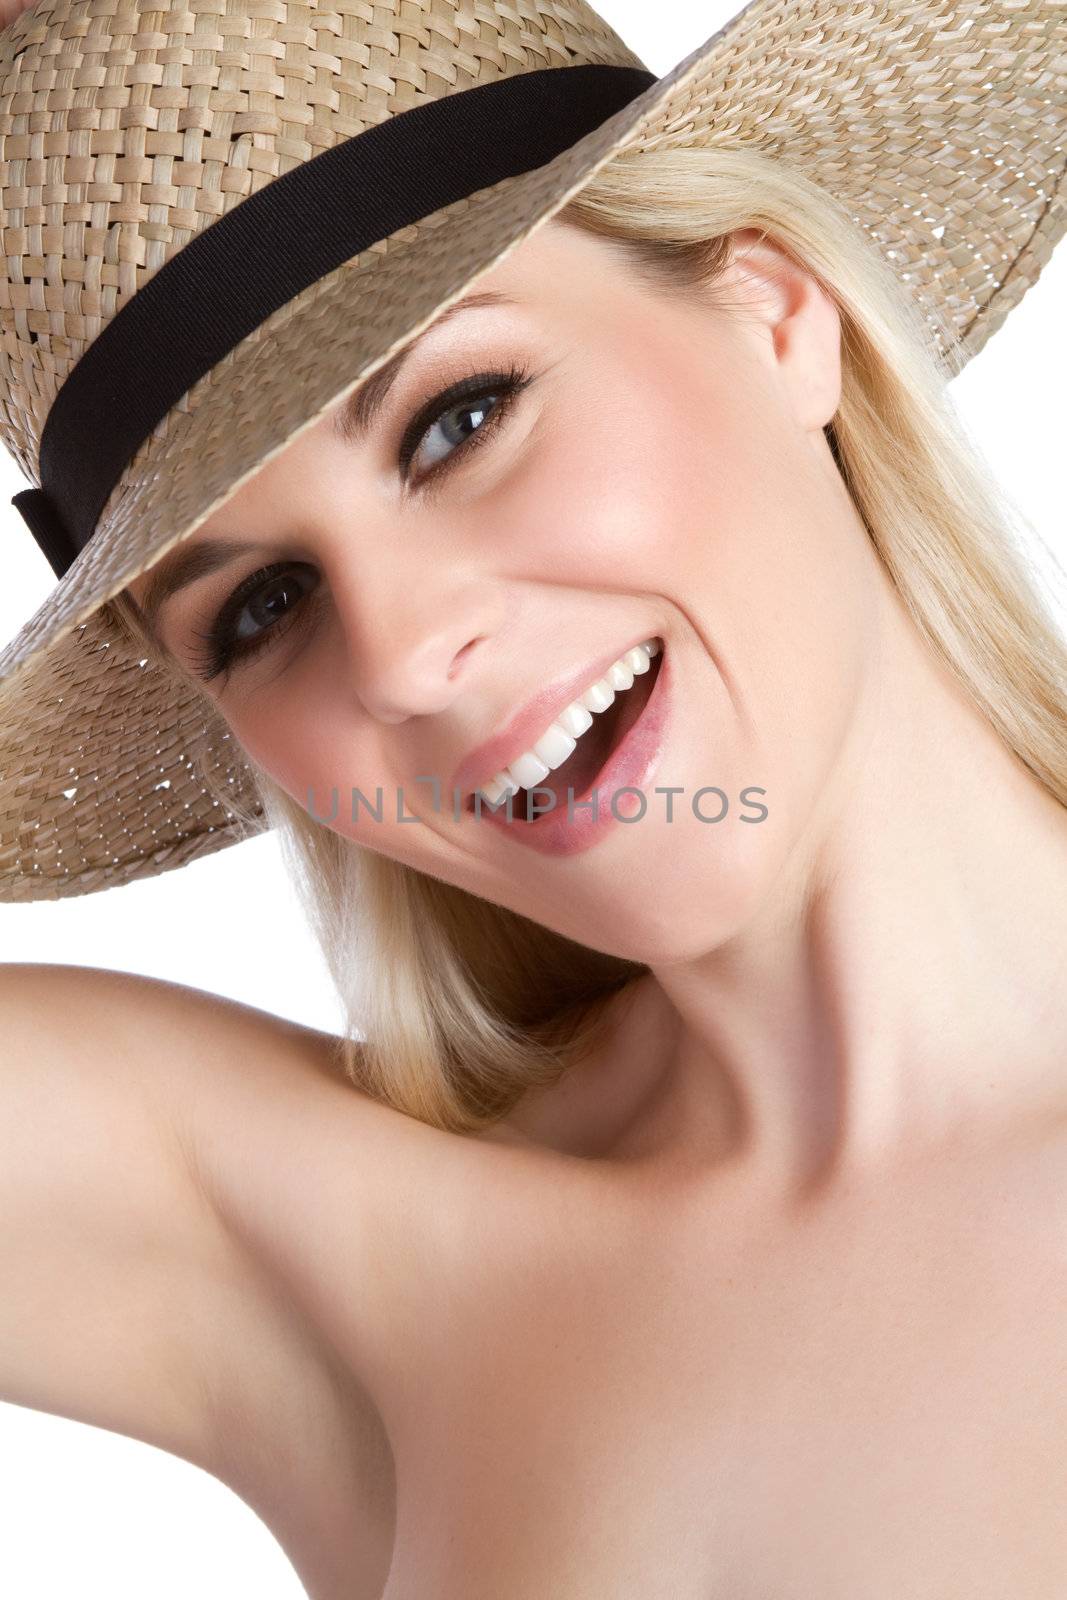 Beautiful smiling woman wearing hat